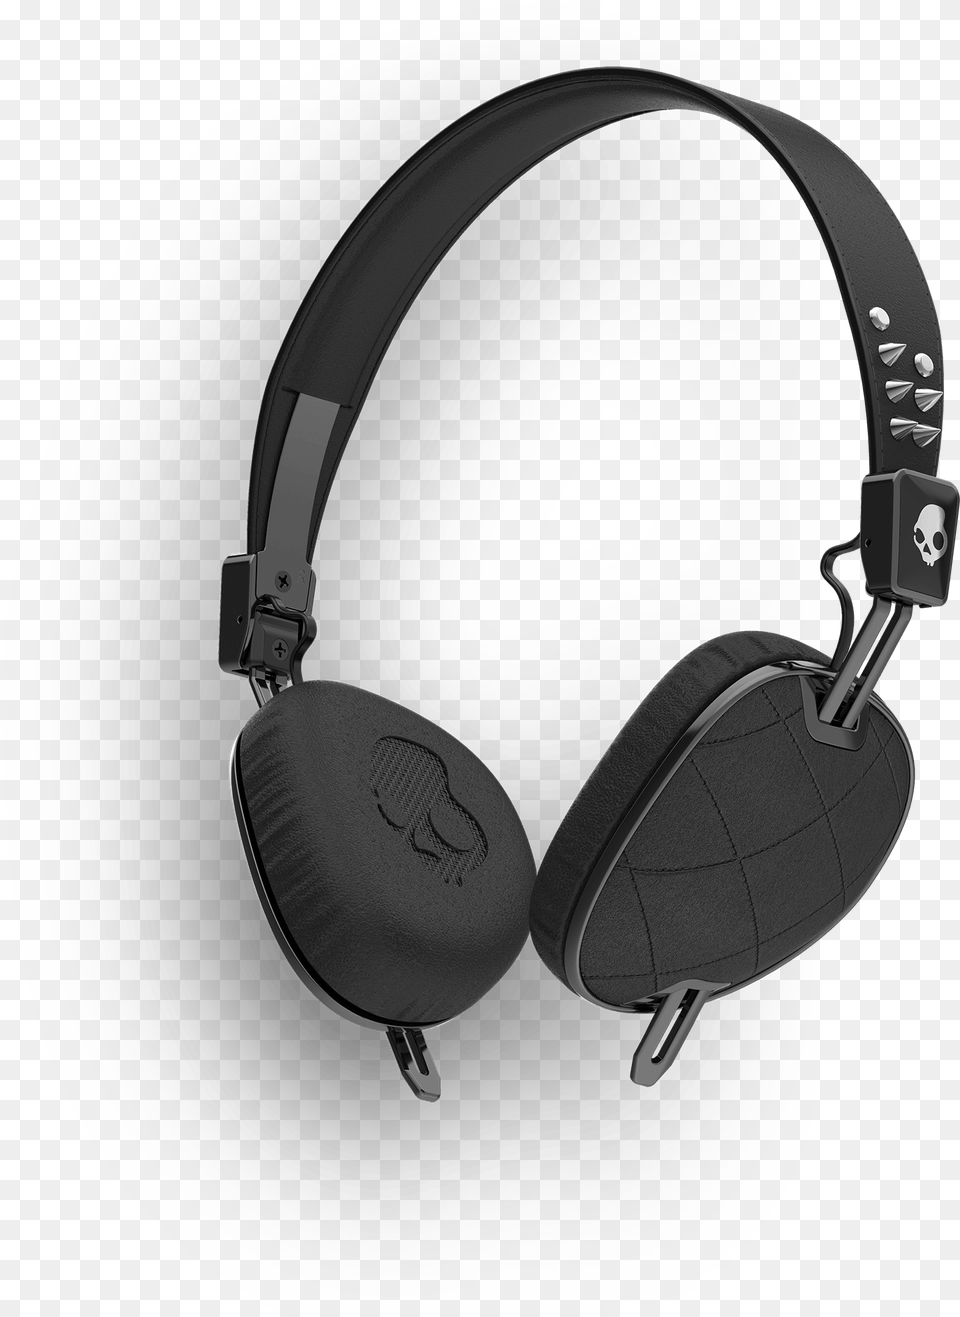 Skullcandy Knockout On Ear Headphones In Quilted Black Skullcandy Knockout Black, Electronics Png